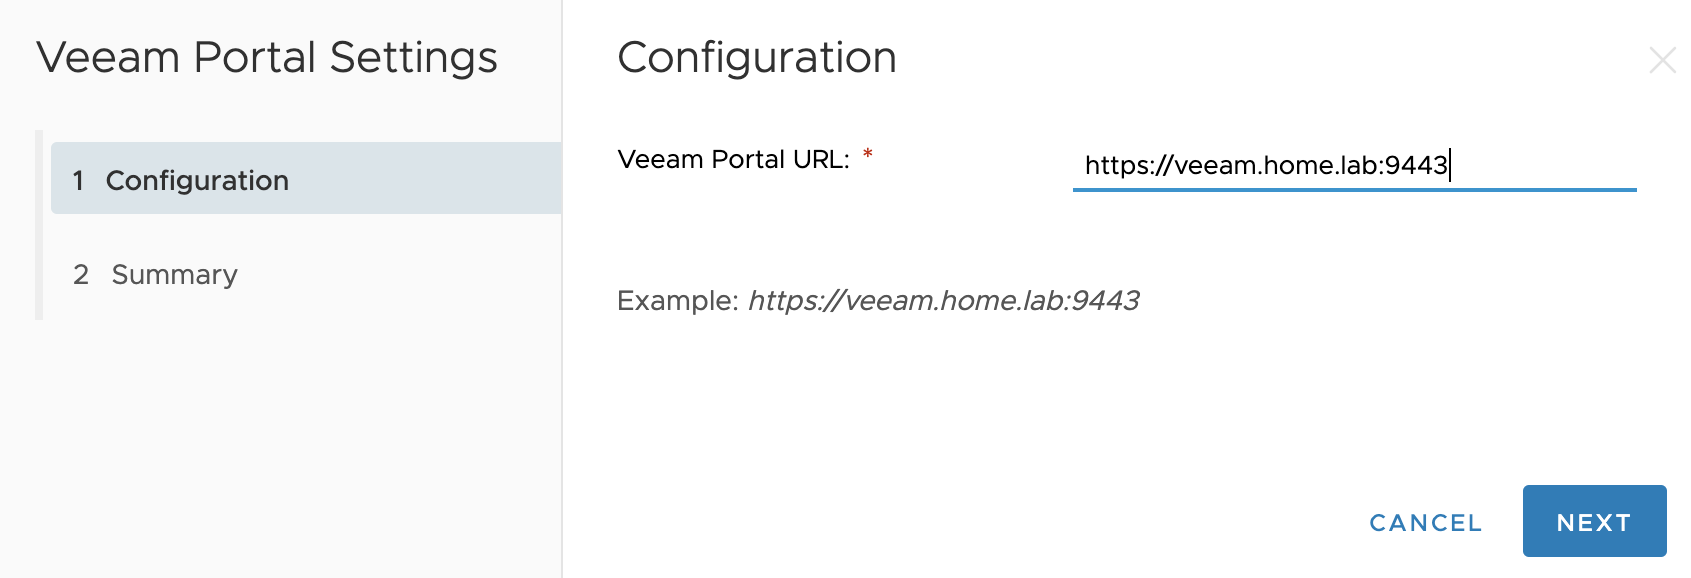 Veeam Portal Settings